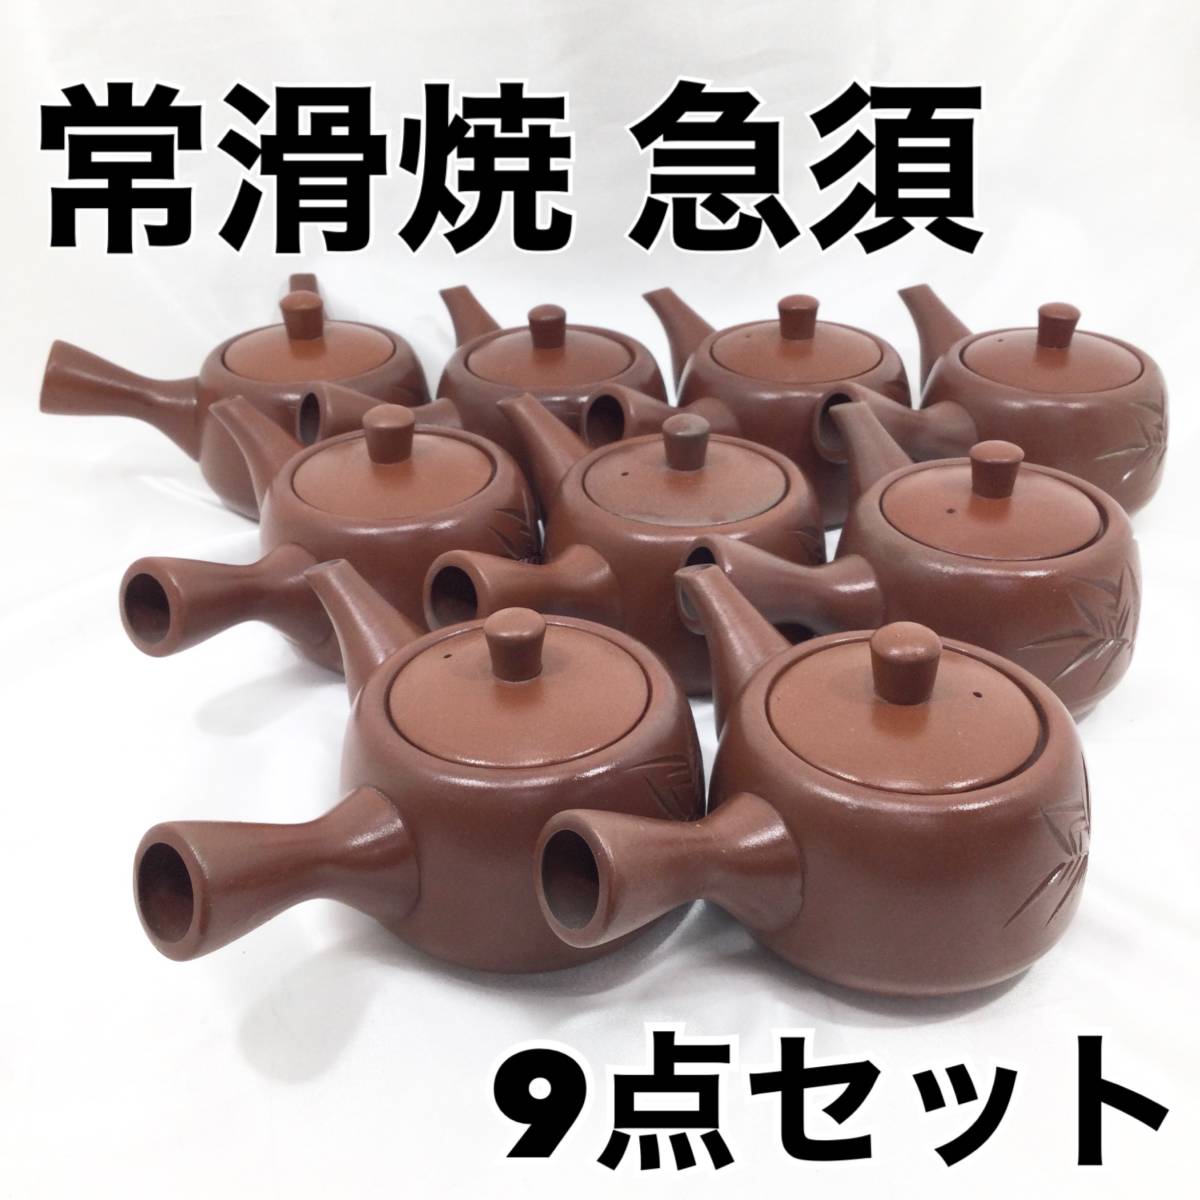 Yahoo!オークション - 常滑焼 急須 9点 まとめ売り朱泥 茶器 煎茶道具 